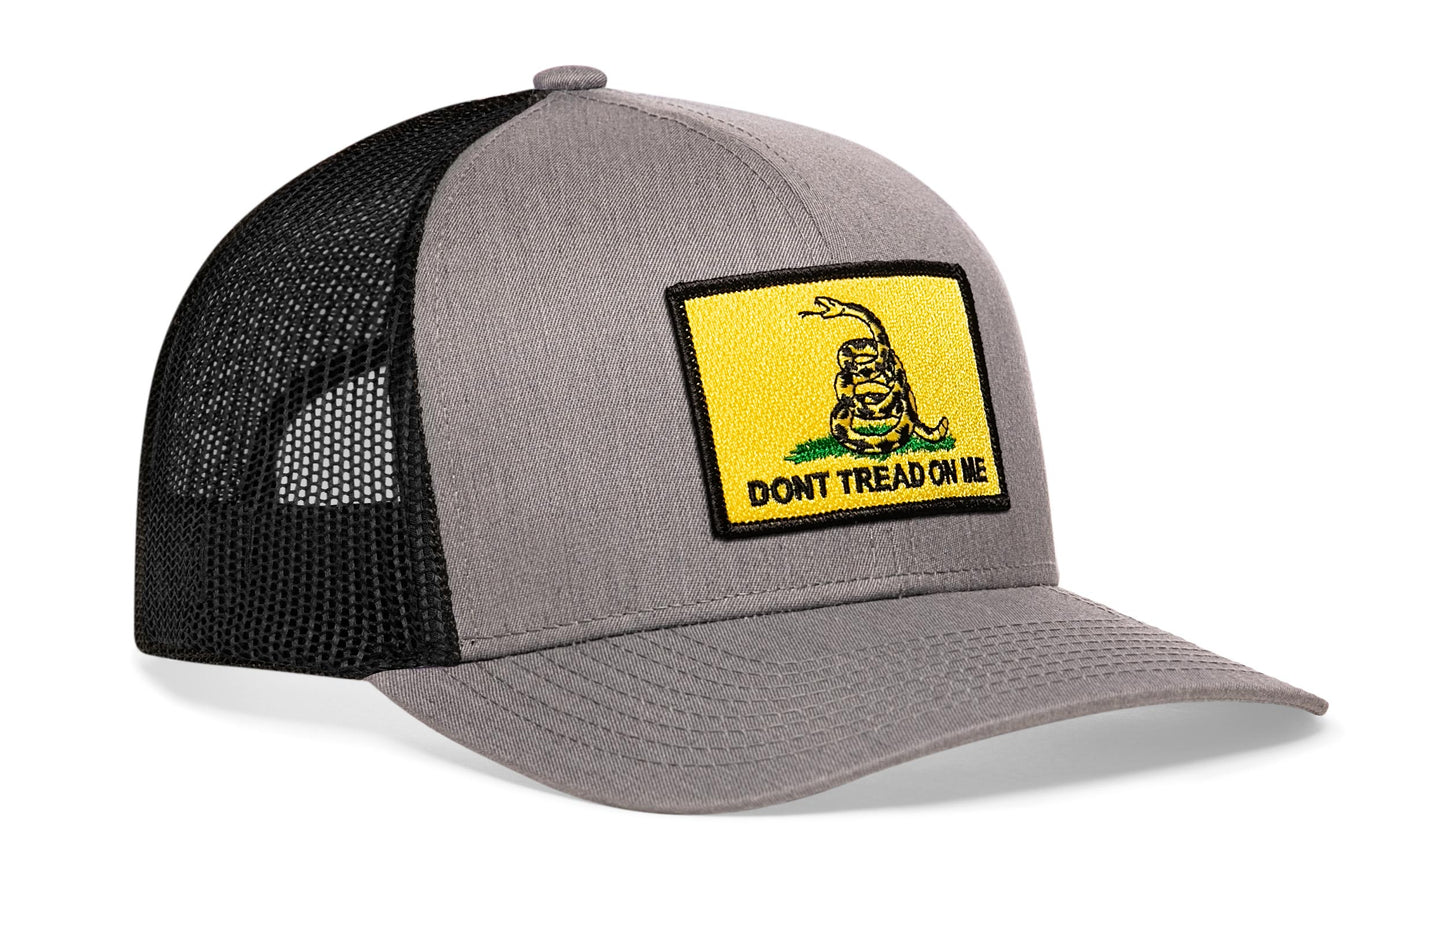 Dont Tread on Me Trucker Hat  |  Gray Black Gadsden Flag Snapback